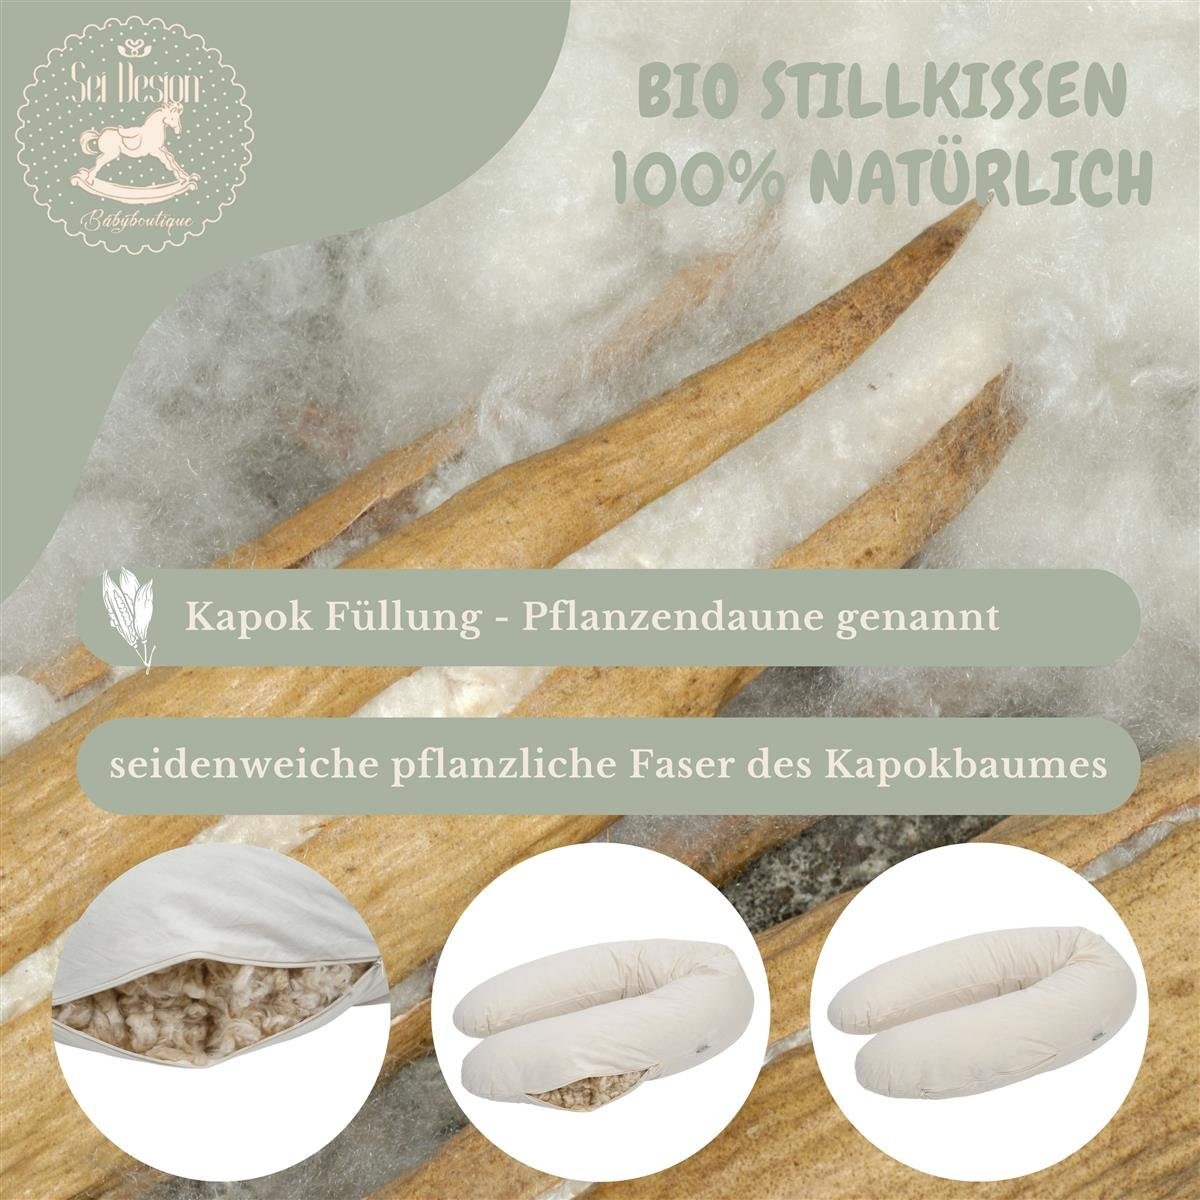 SEI Design Stillkissen BIO-Stillkissen Naturstillkissen Musselin Kapok BIO Bezug, 190x30 Baumwolle cm, + + Kissen Natur